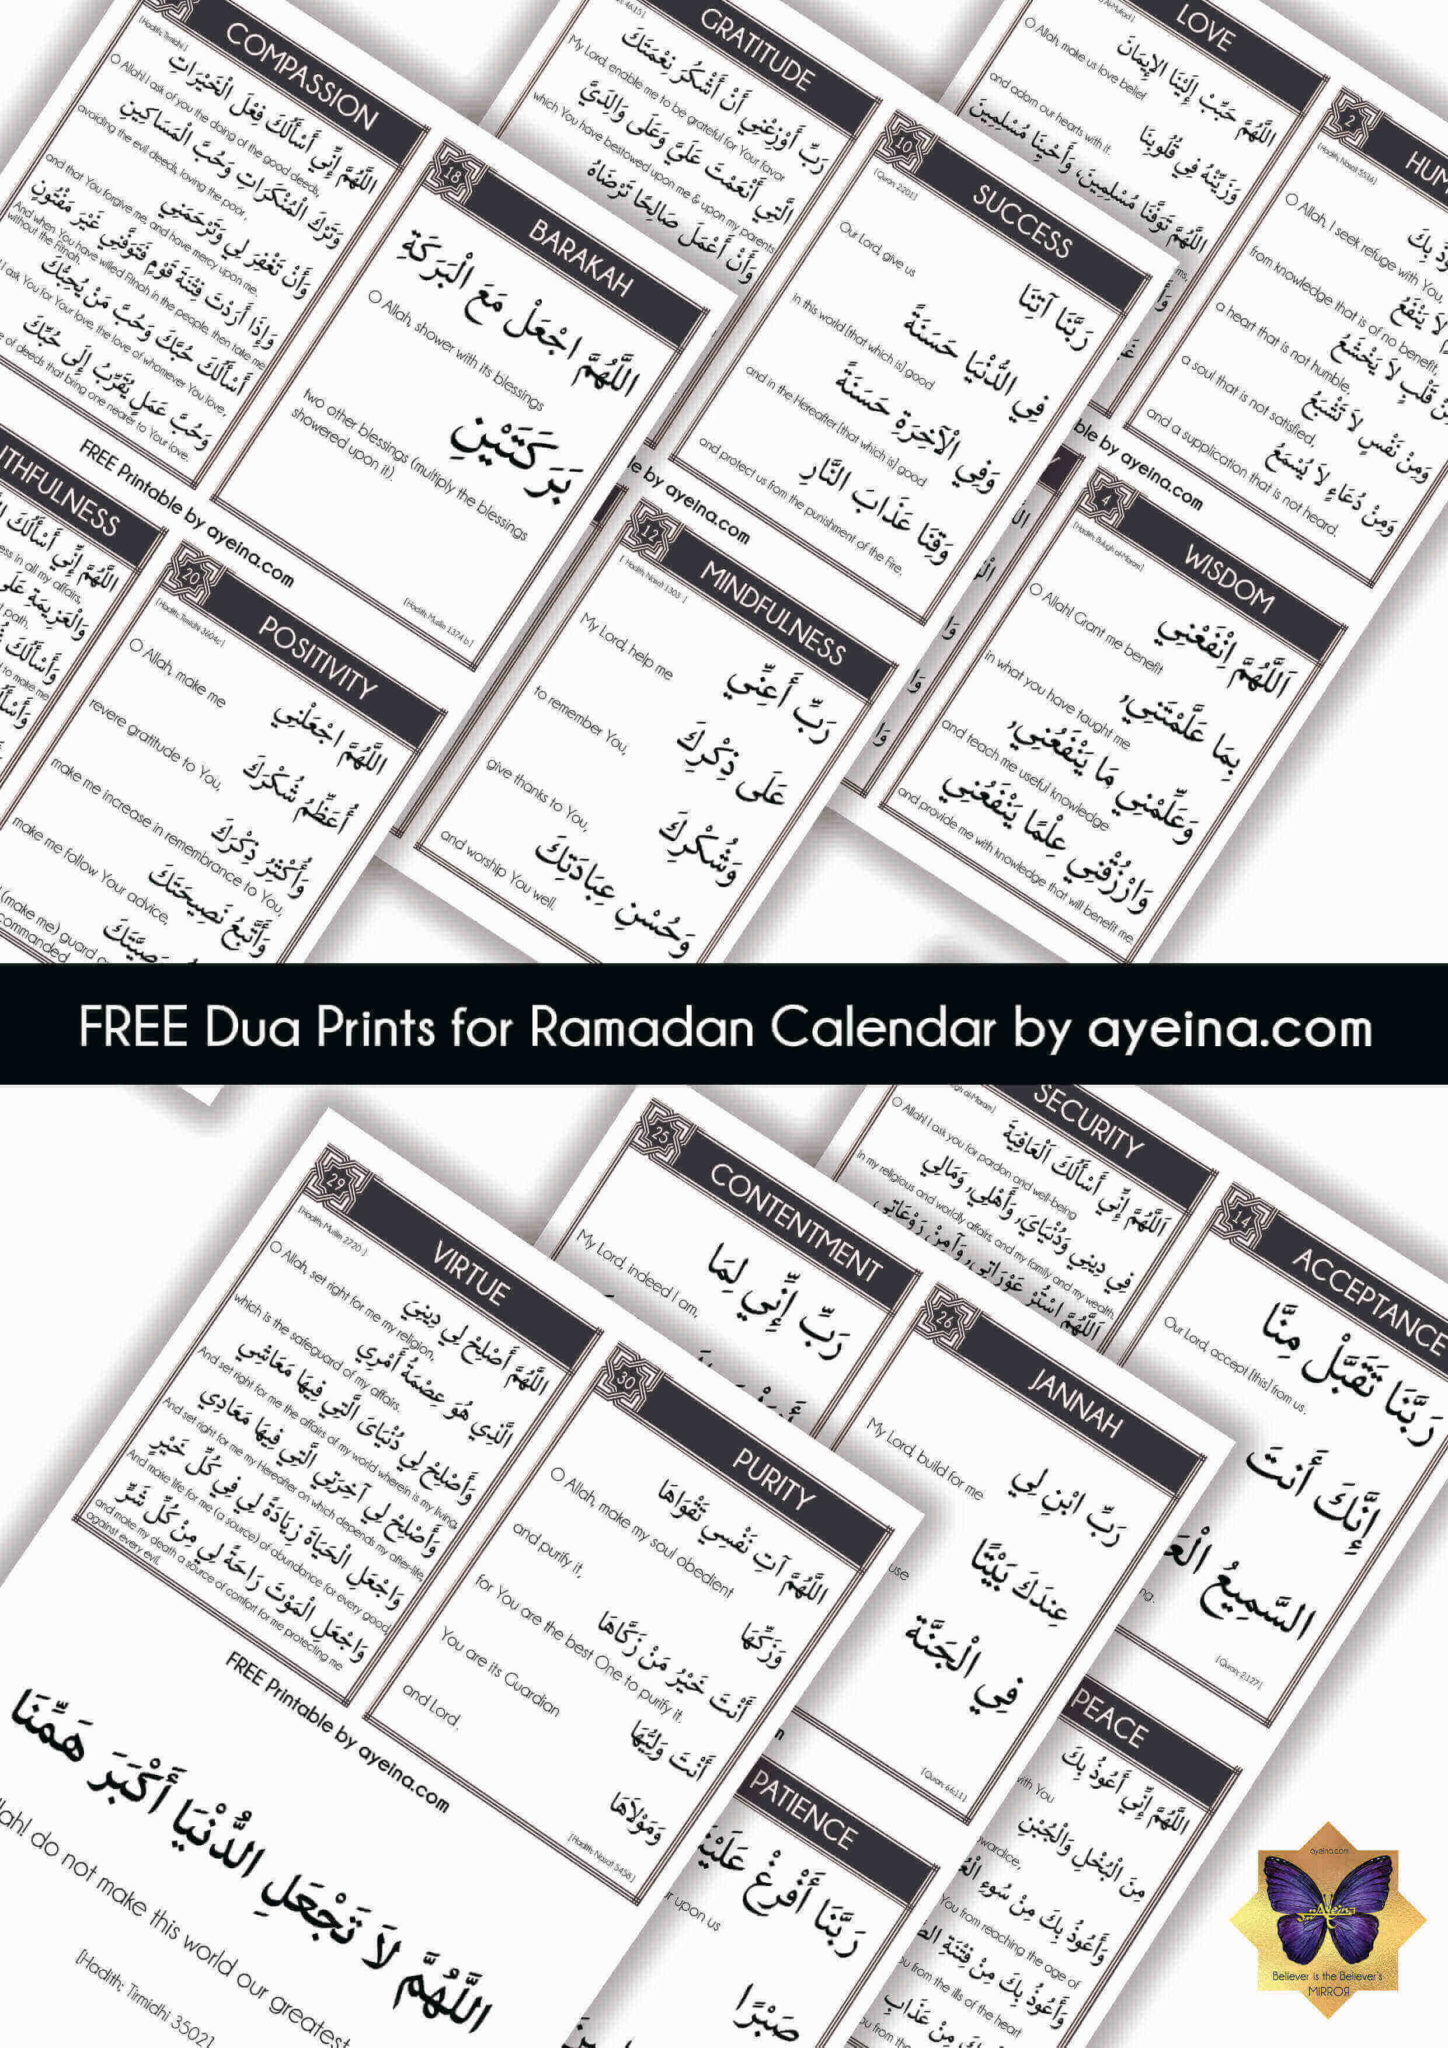 List of 30 Duas (free printables for Ramadan Calendar) AYEINA